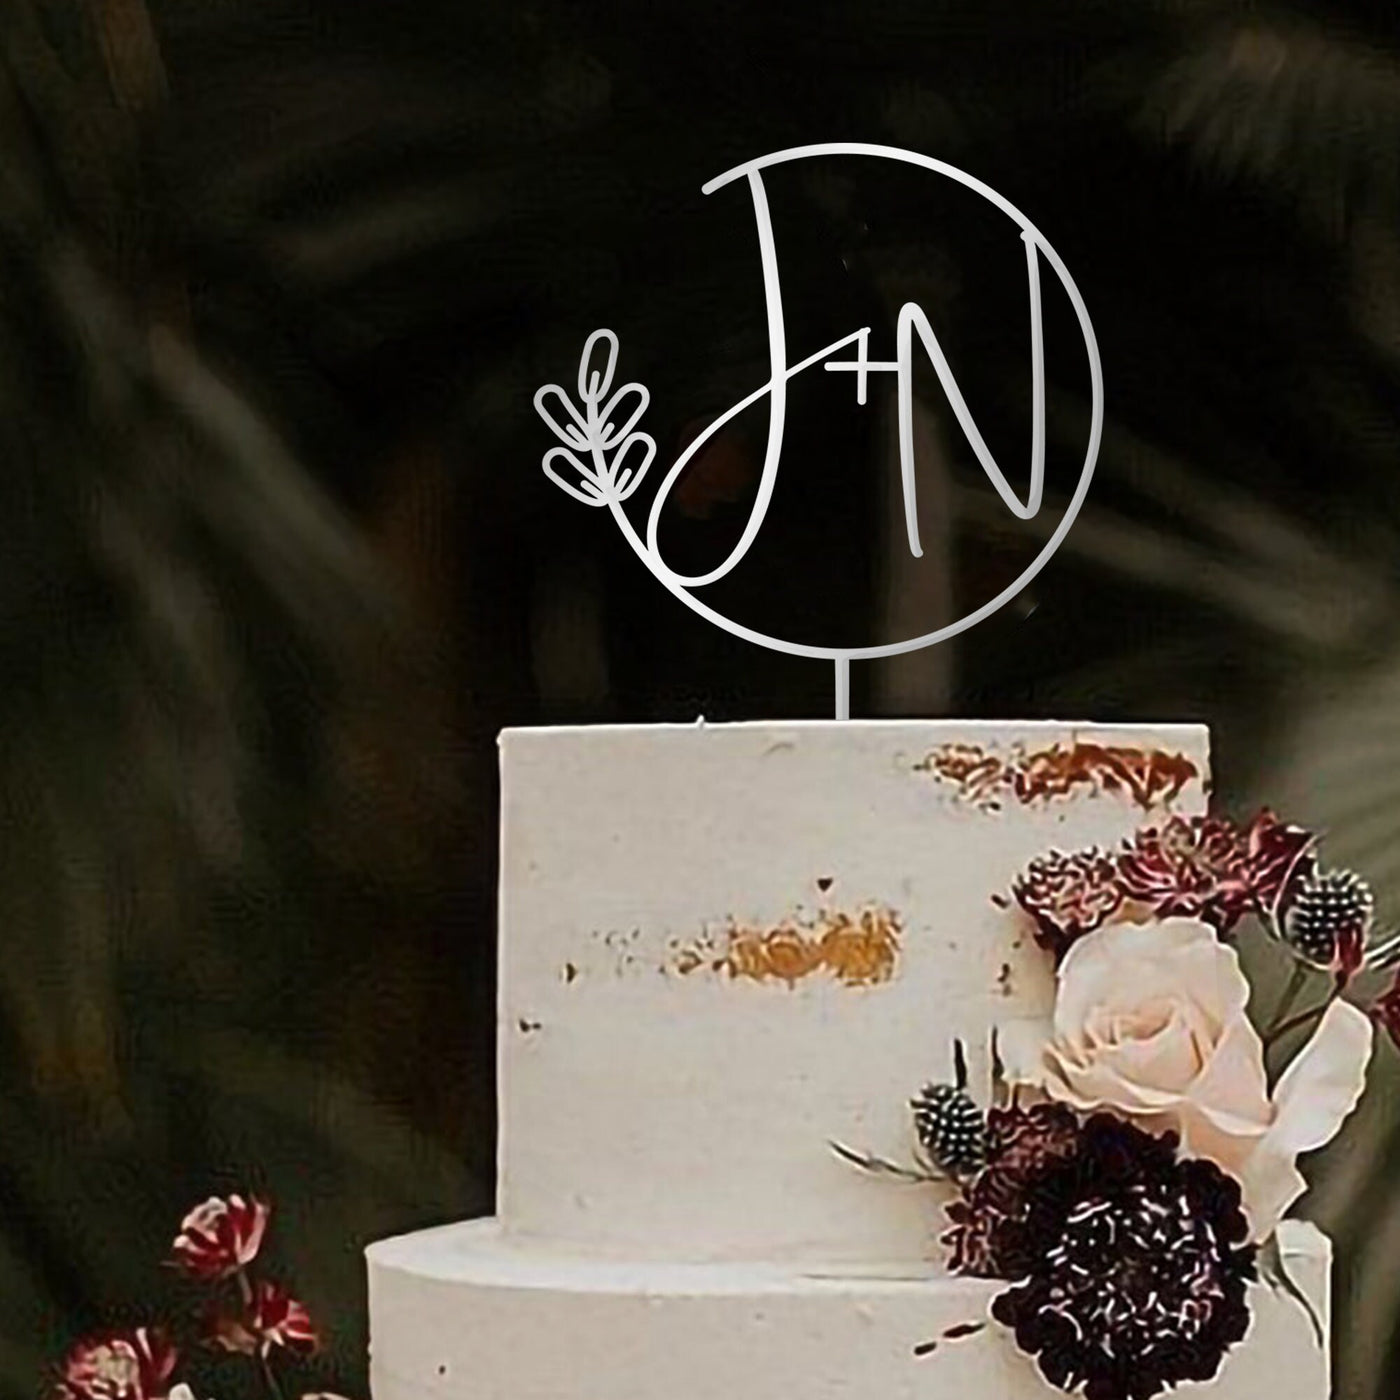 Gold monogram Wedding cake topper, Wreath Initial cake topper for Rustic wedding decor, Custom cake topper bride and groom